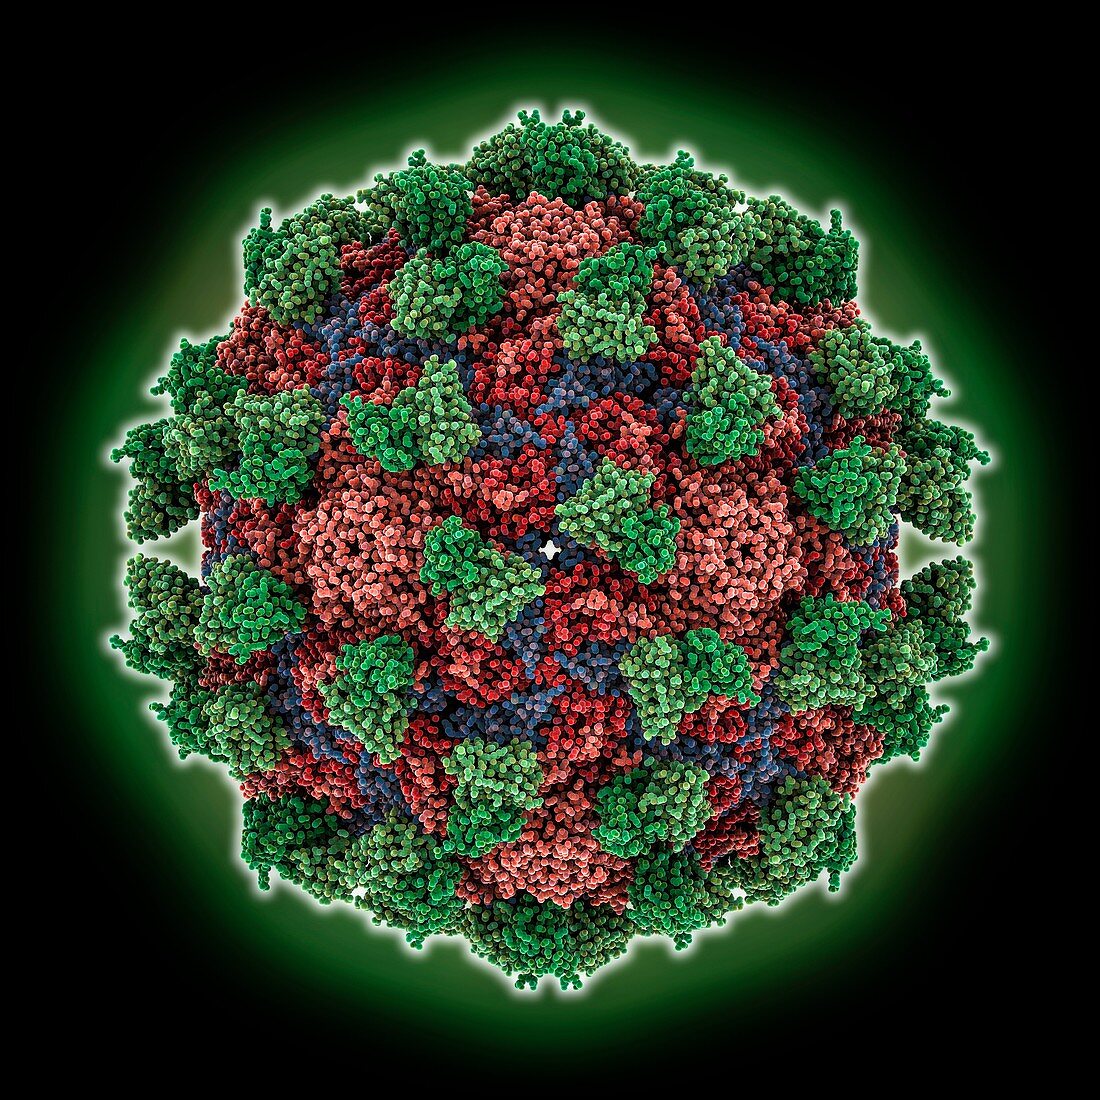 Enterovirus capsid complexed with antibody, molecular model